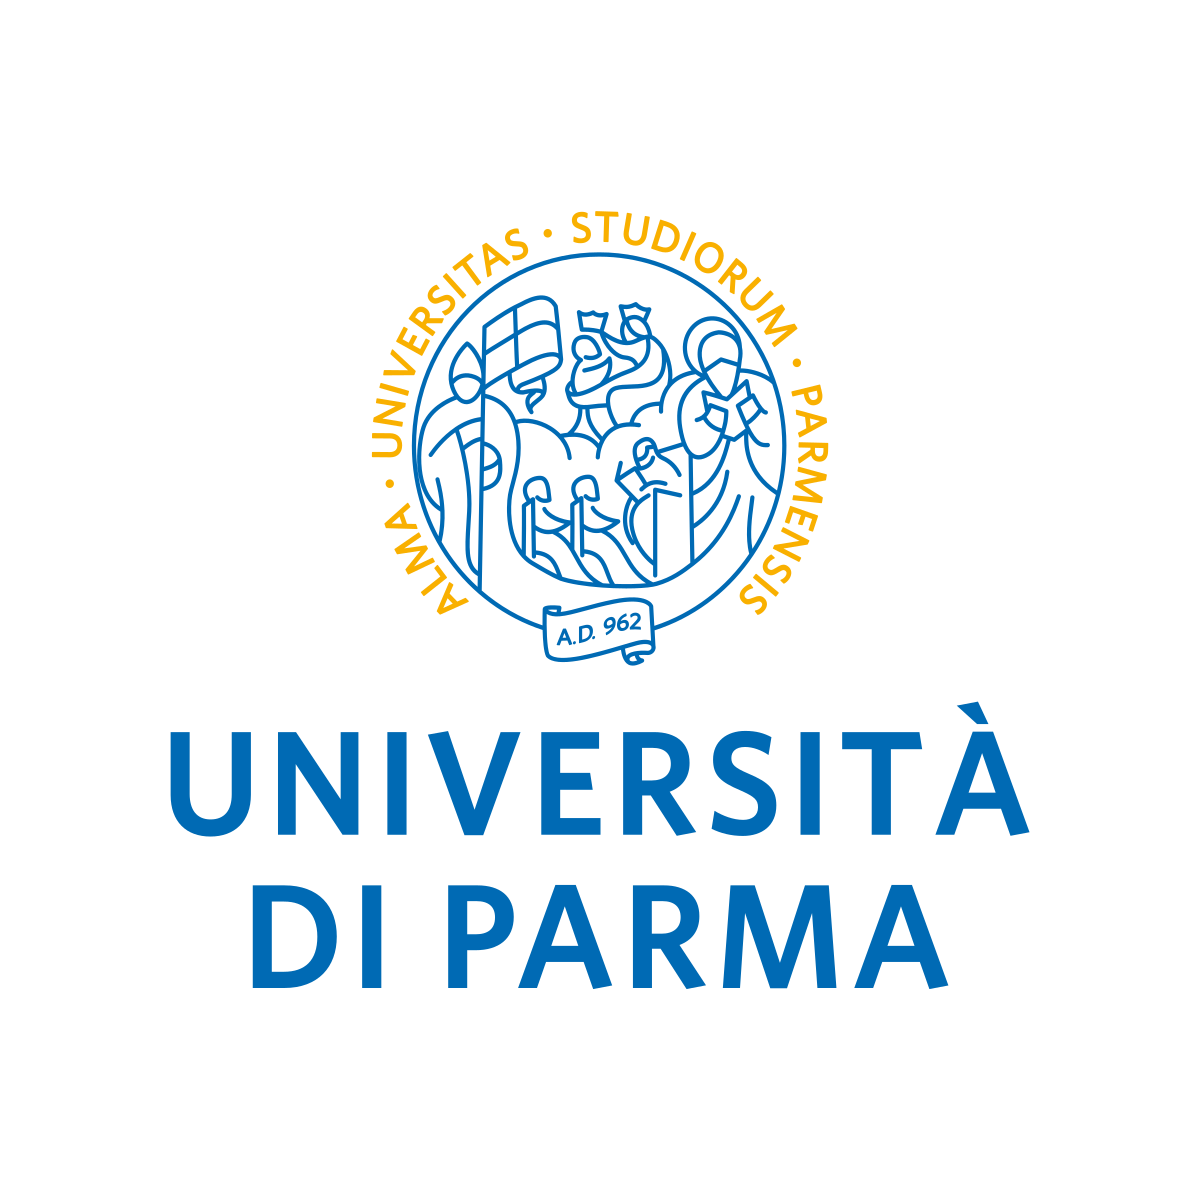 Università-parma-logo-svg